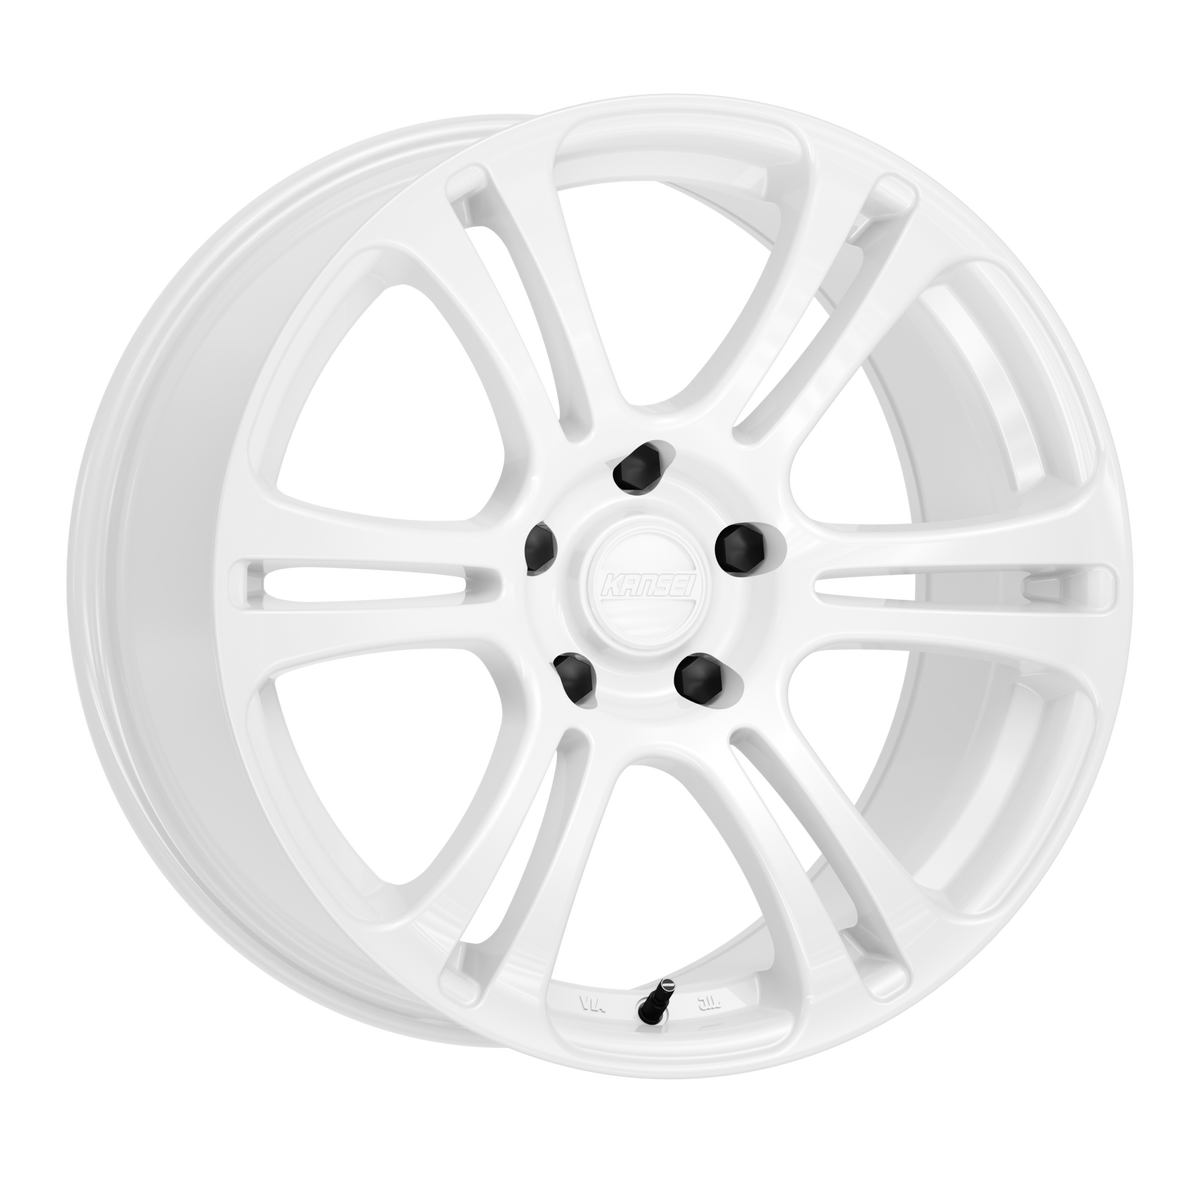 K16W NEO Wheel, Size: 18" x 10.50", Bolt Pattern: 5 x 100 mm, Backspace: 6.22" [Finish: Gloss White]